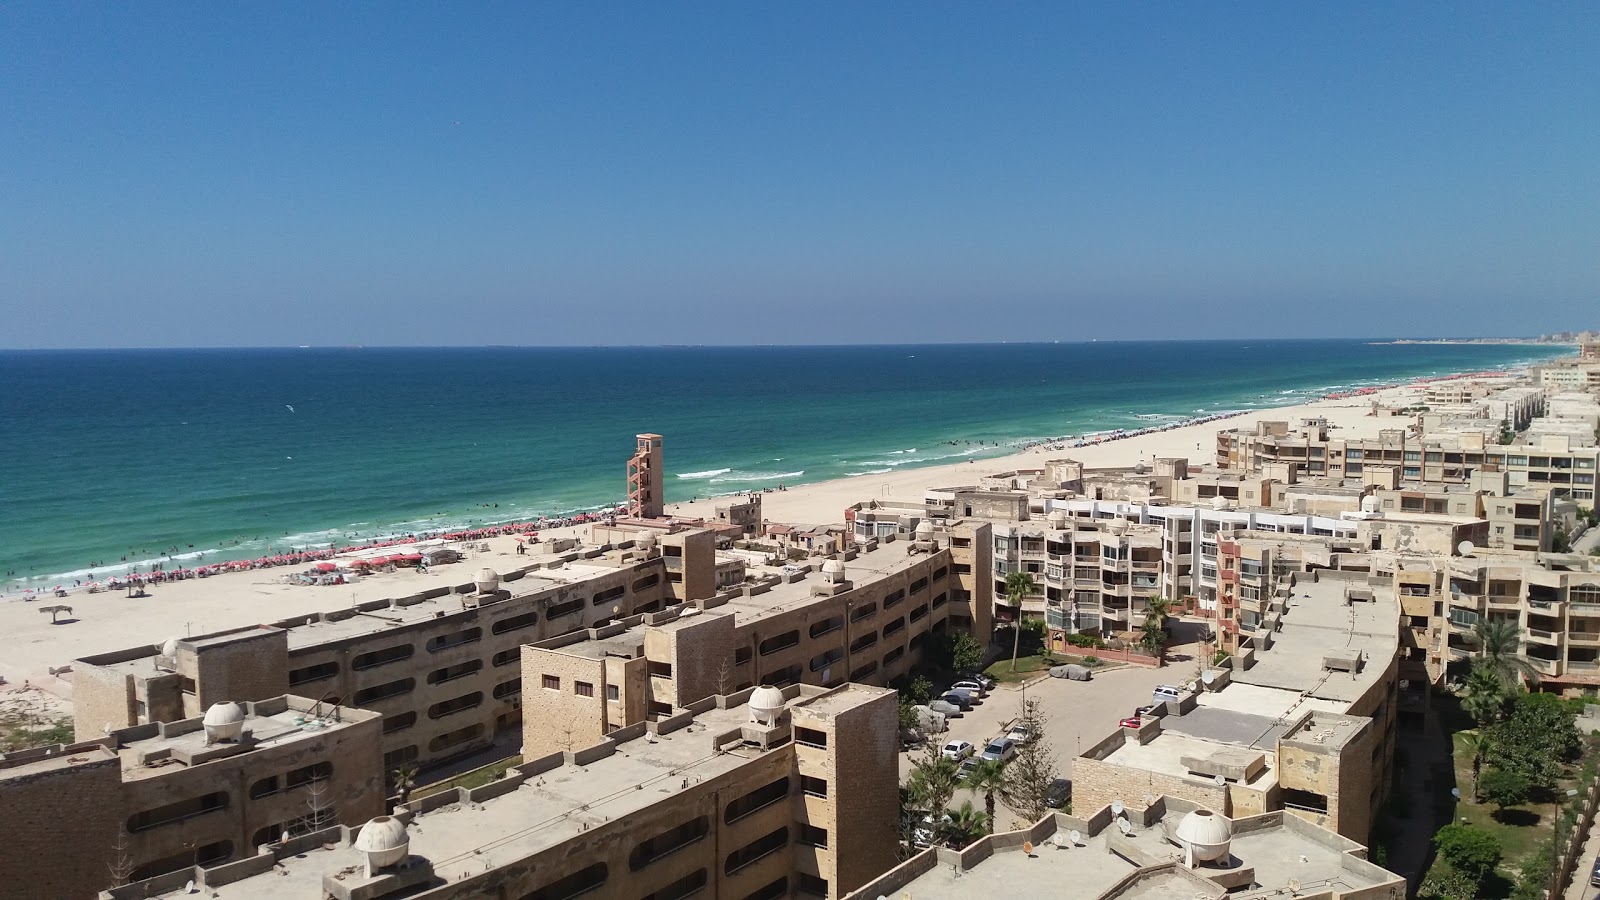 Foto di El Nakheel Beach con una superficie del acqua cristallina